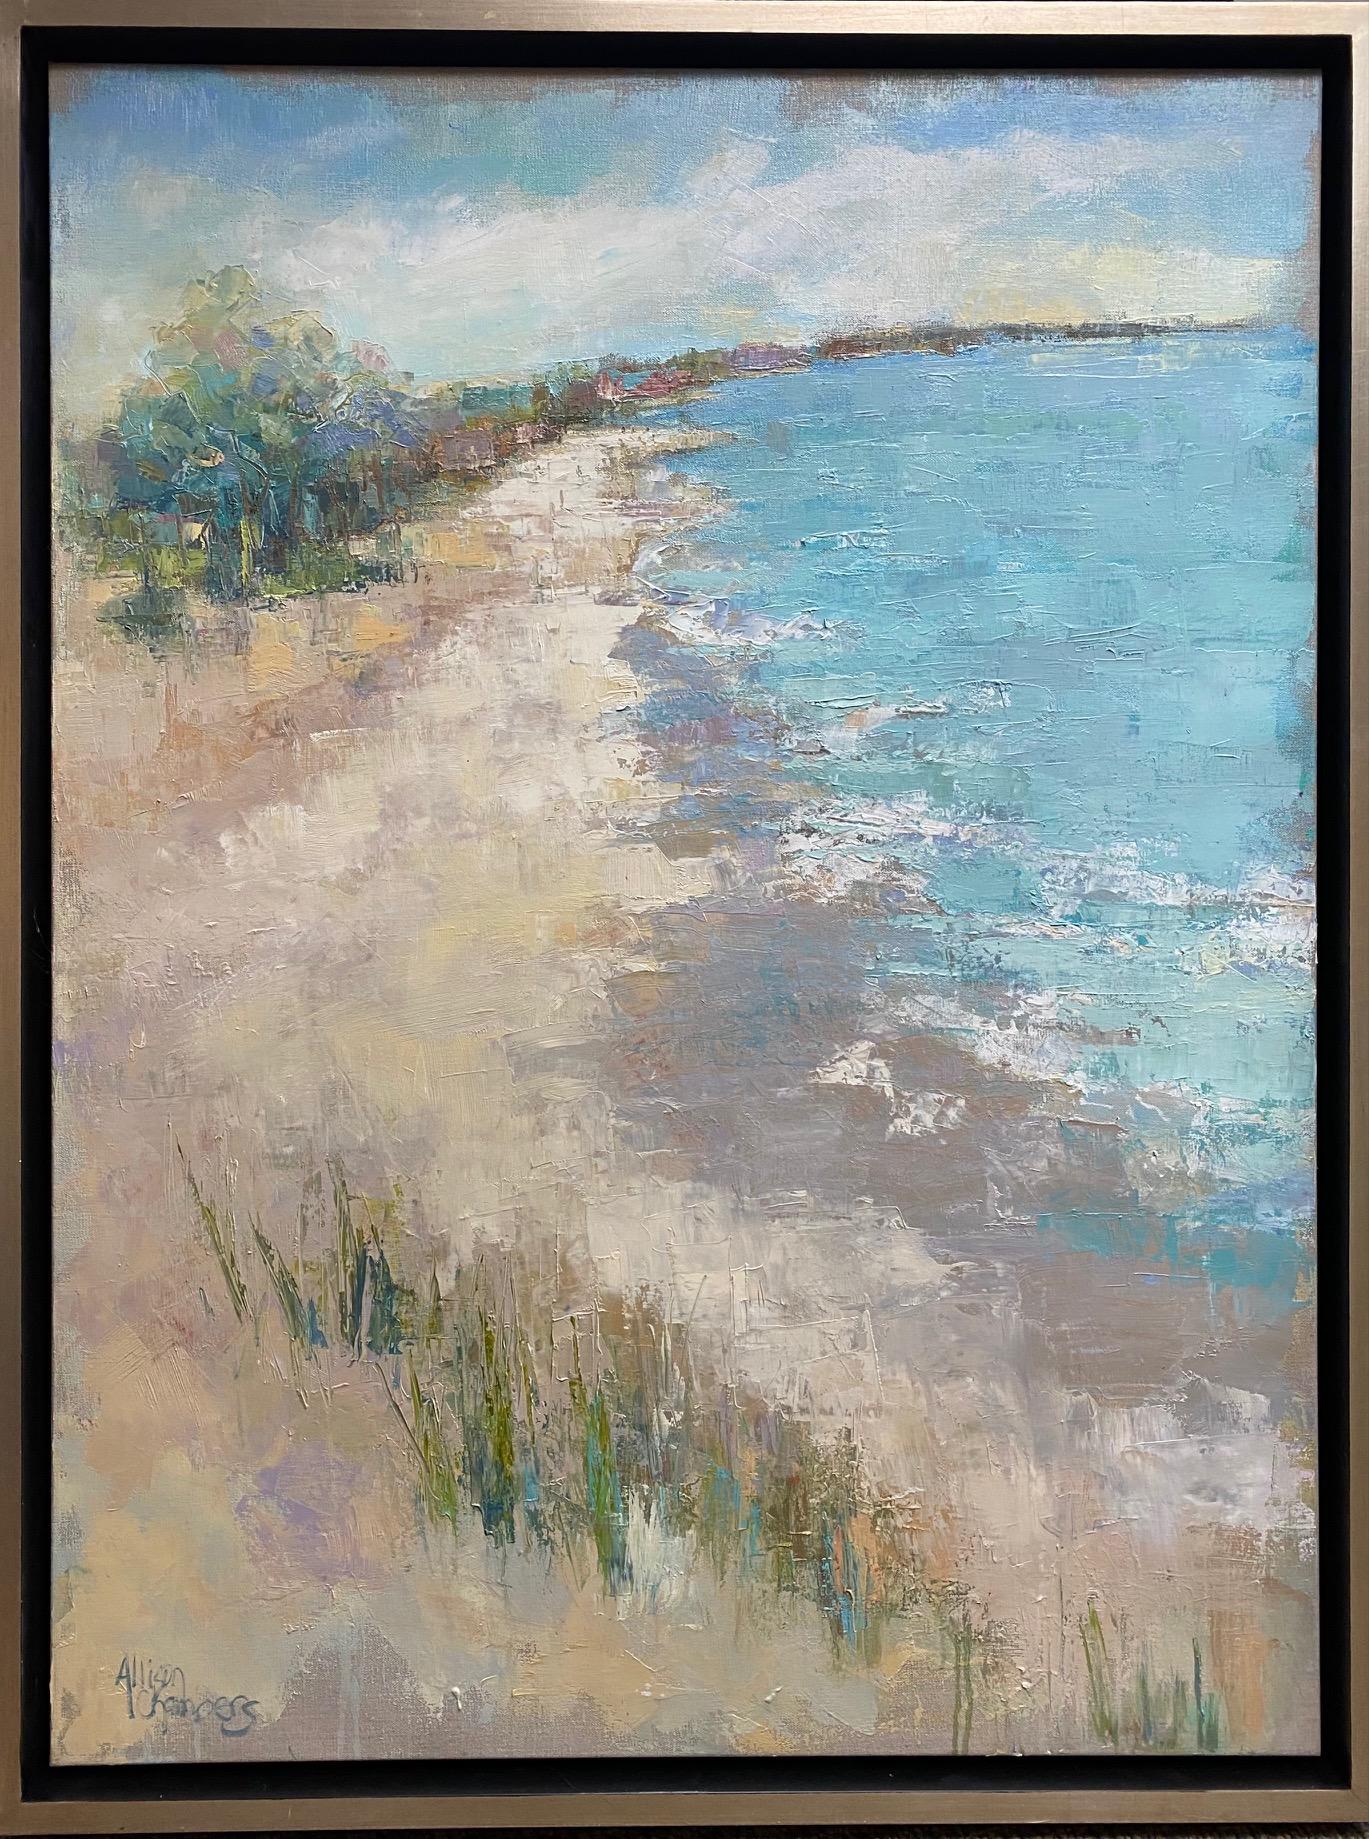 Allison Chambers Landscape Painting - Coastal Walk, original 40x30 abstract expressionist marine landscape